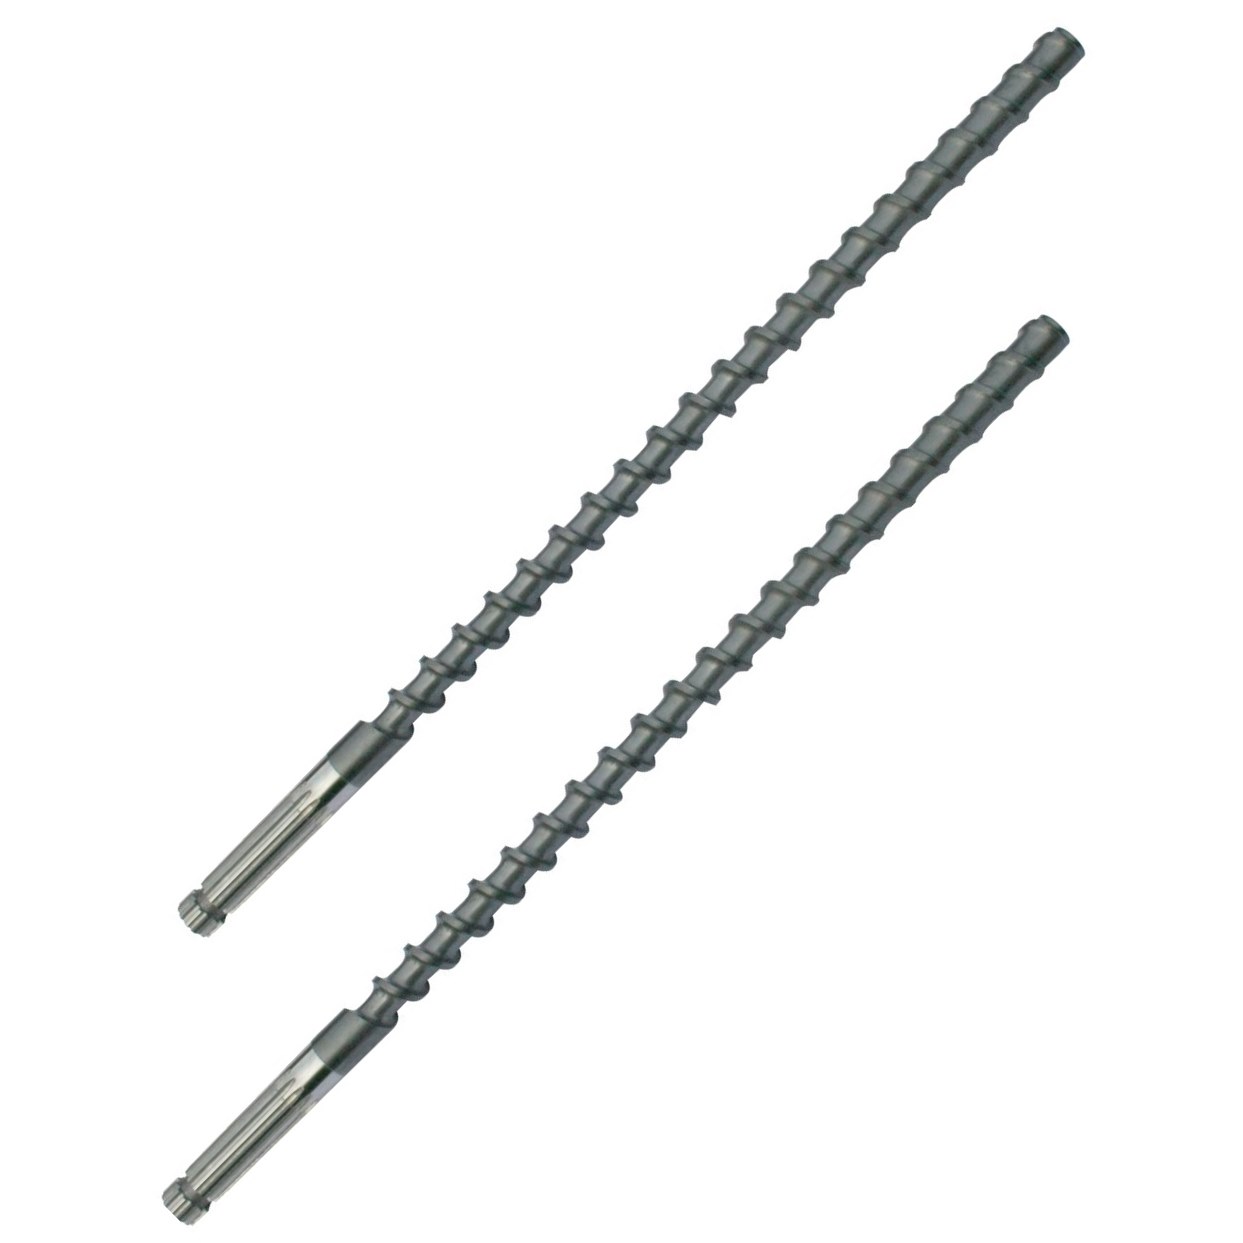 Tungsten carbide alloy screw